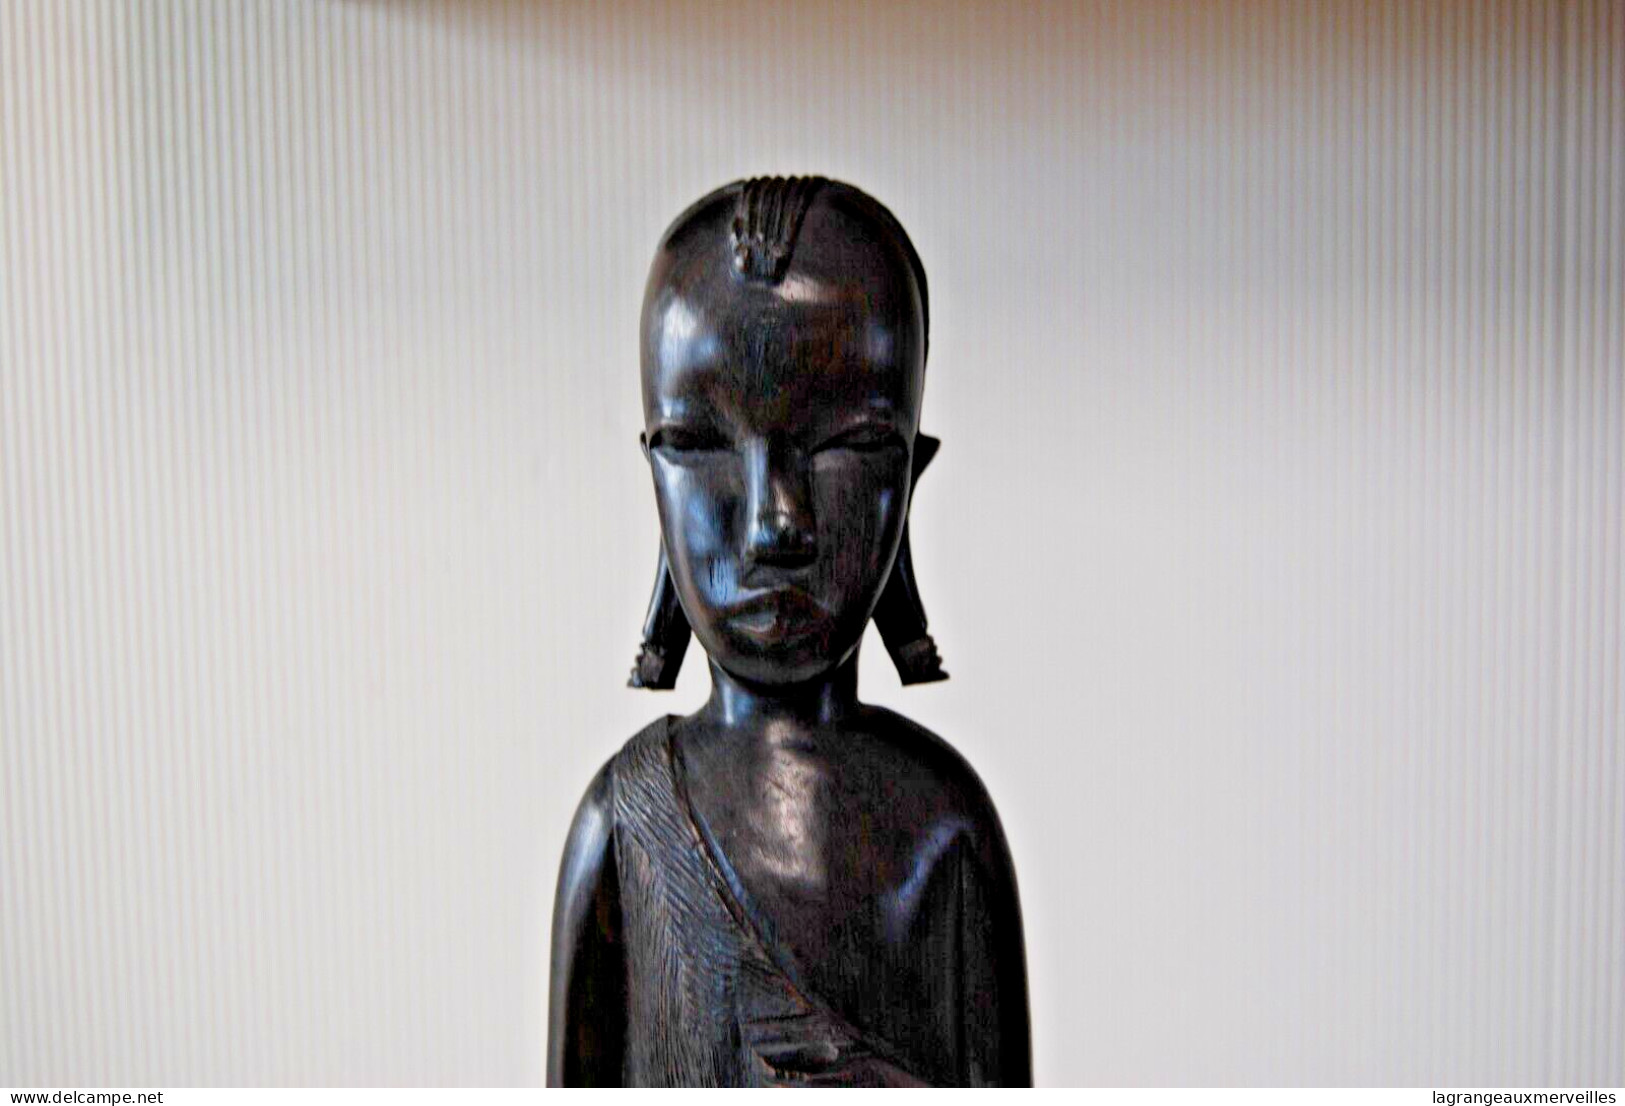 E1 Ancienne masque buste africain - outil ancien - ethnique - tribal H45